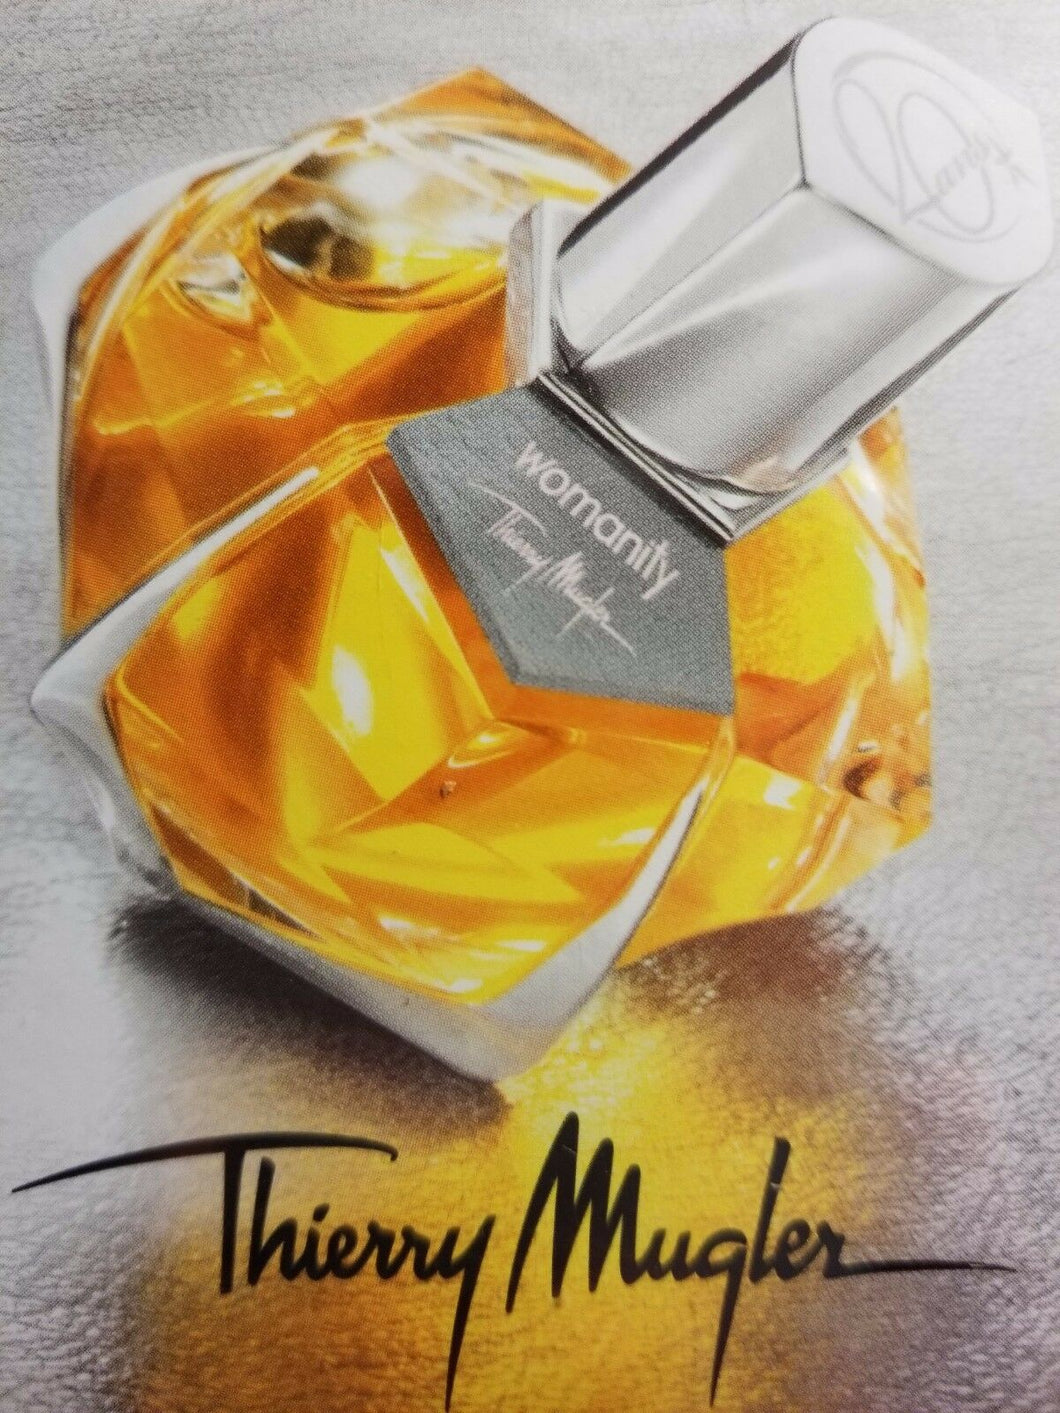 Womanity by Thierry Mugler 20 YEARS Eau de Parfum 1 oz 30 ml RARE Perfume SEALED - Perfume Gallery